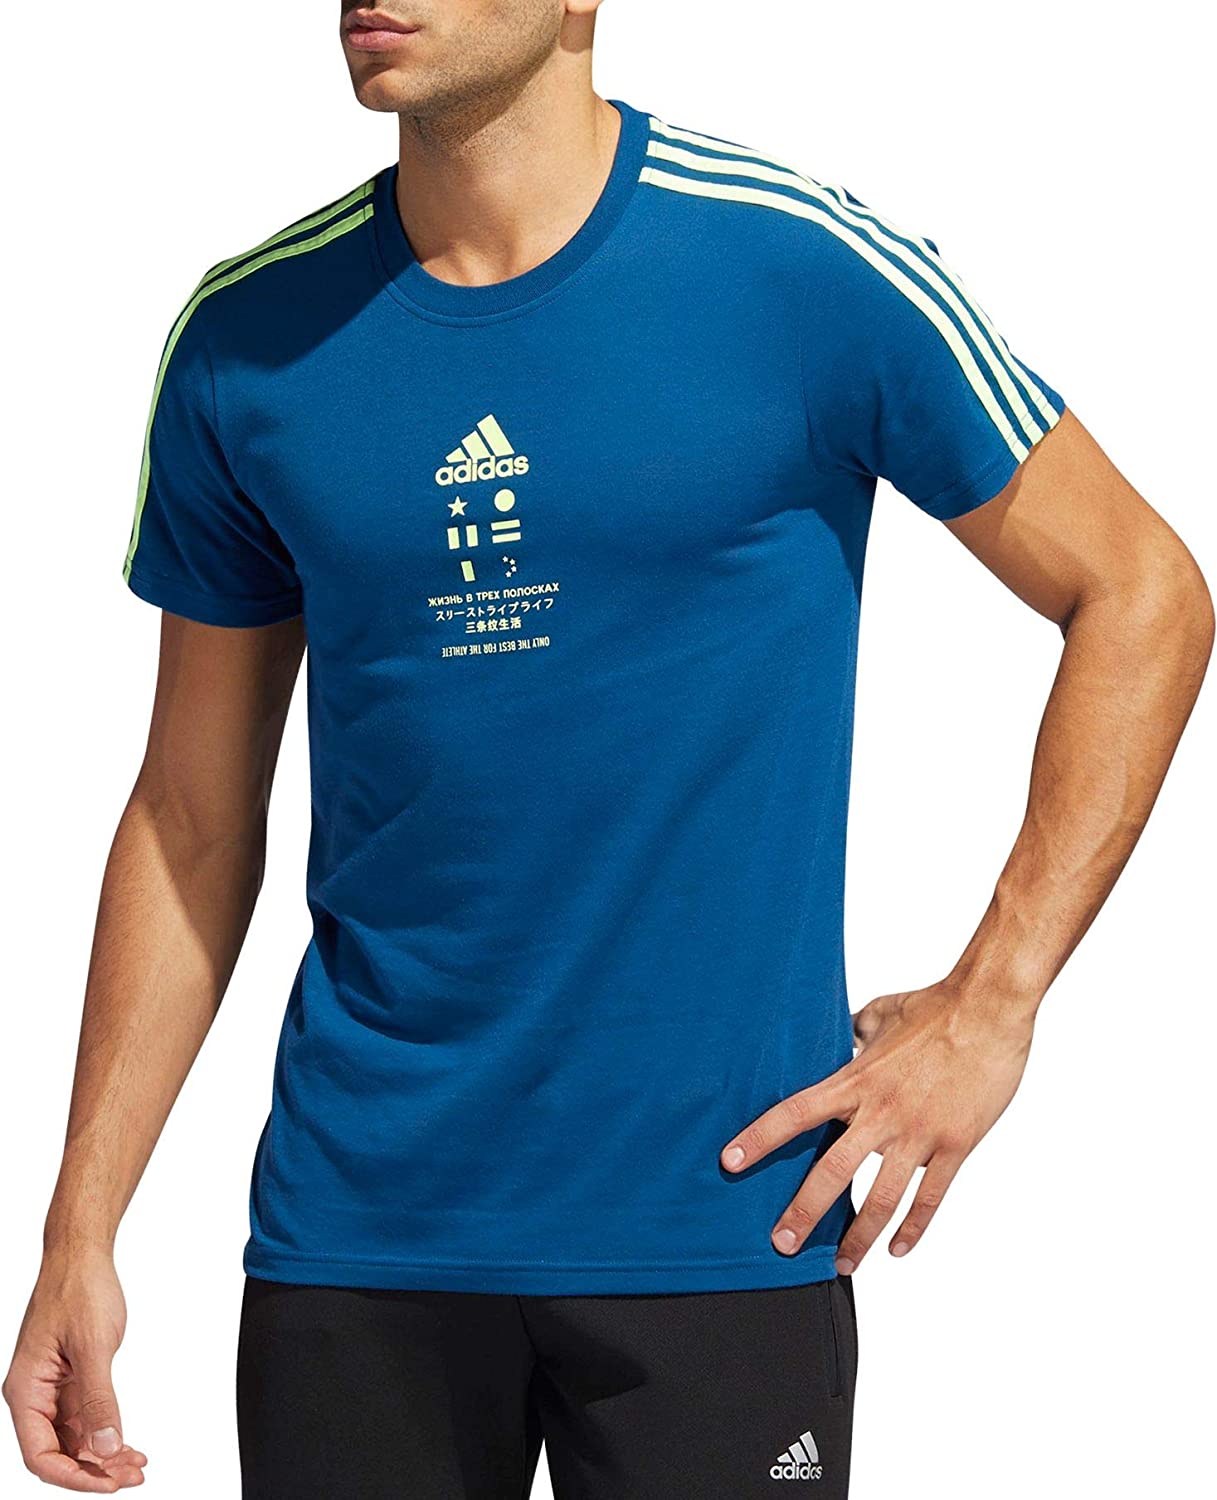 adidas Men's International Classic T-Shirt, Legend Marine/Ye –